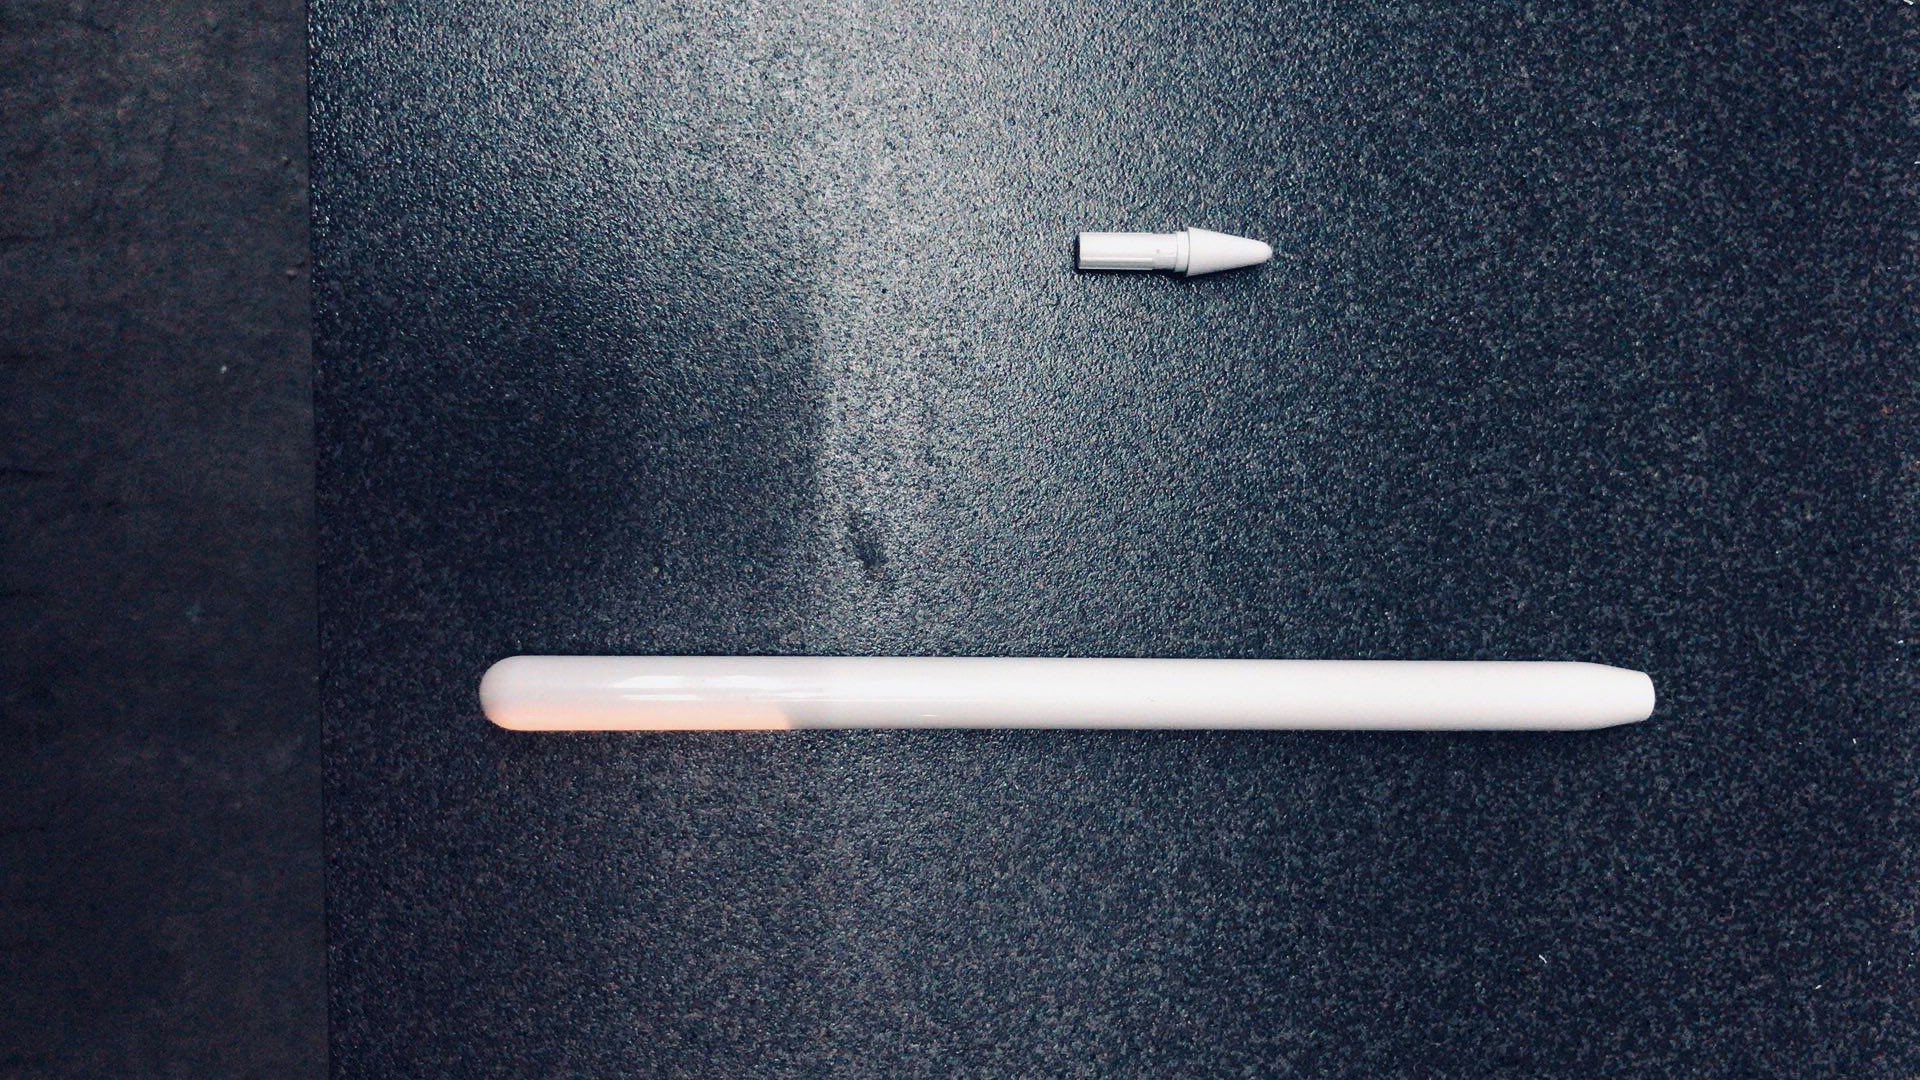 Apple Pencil leak